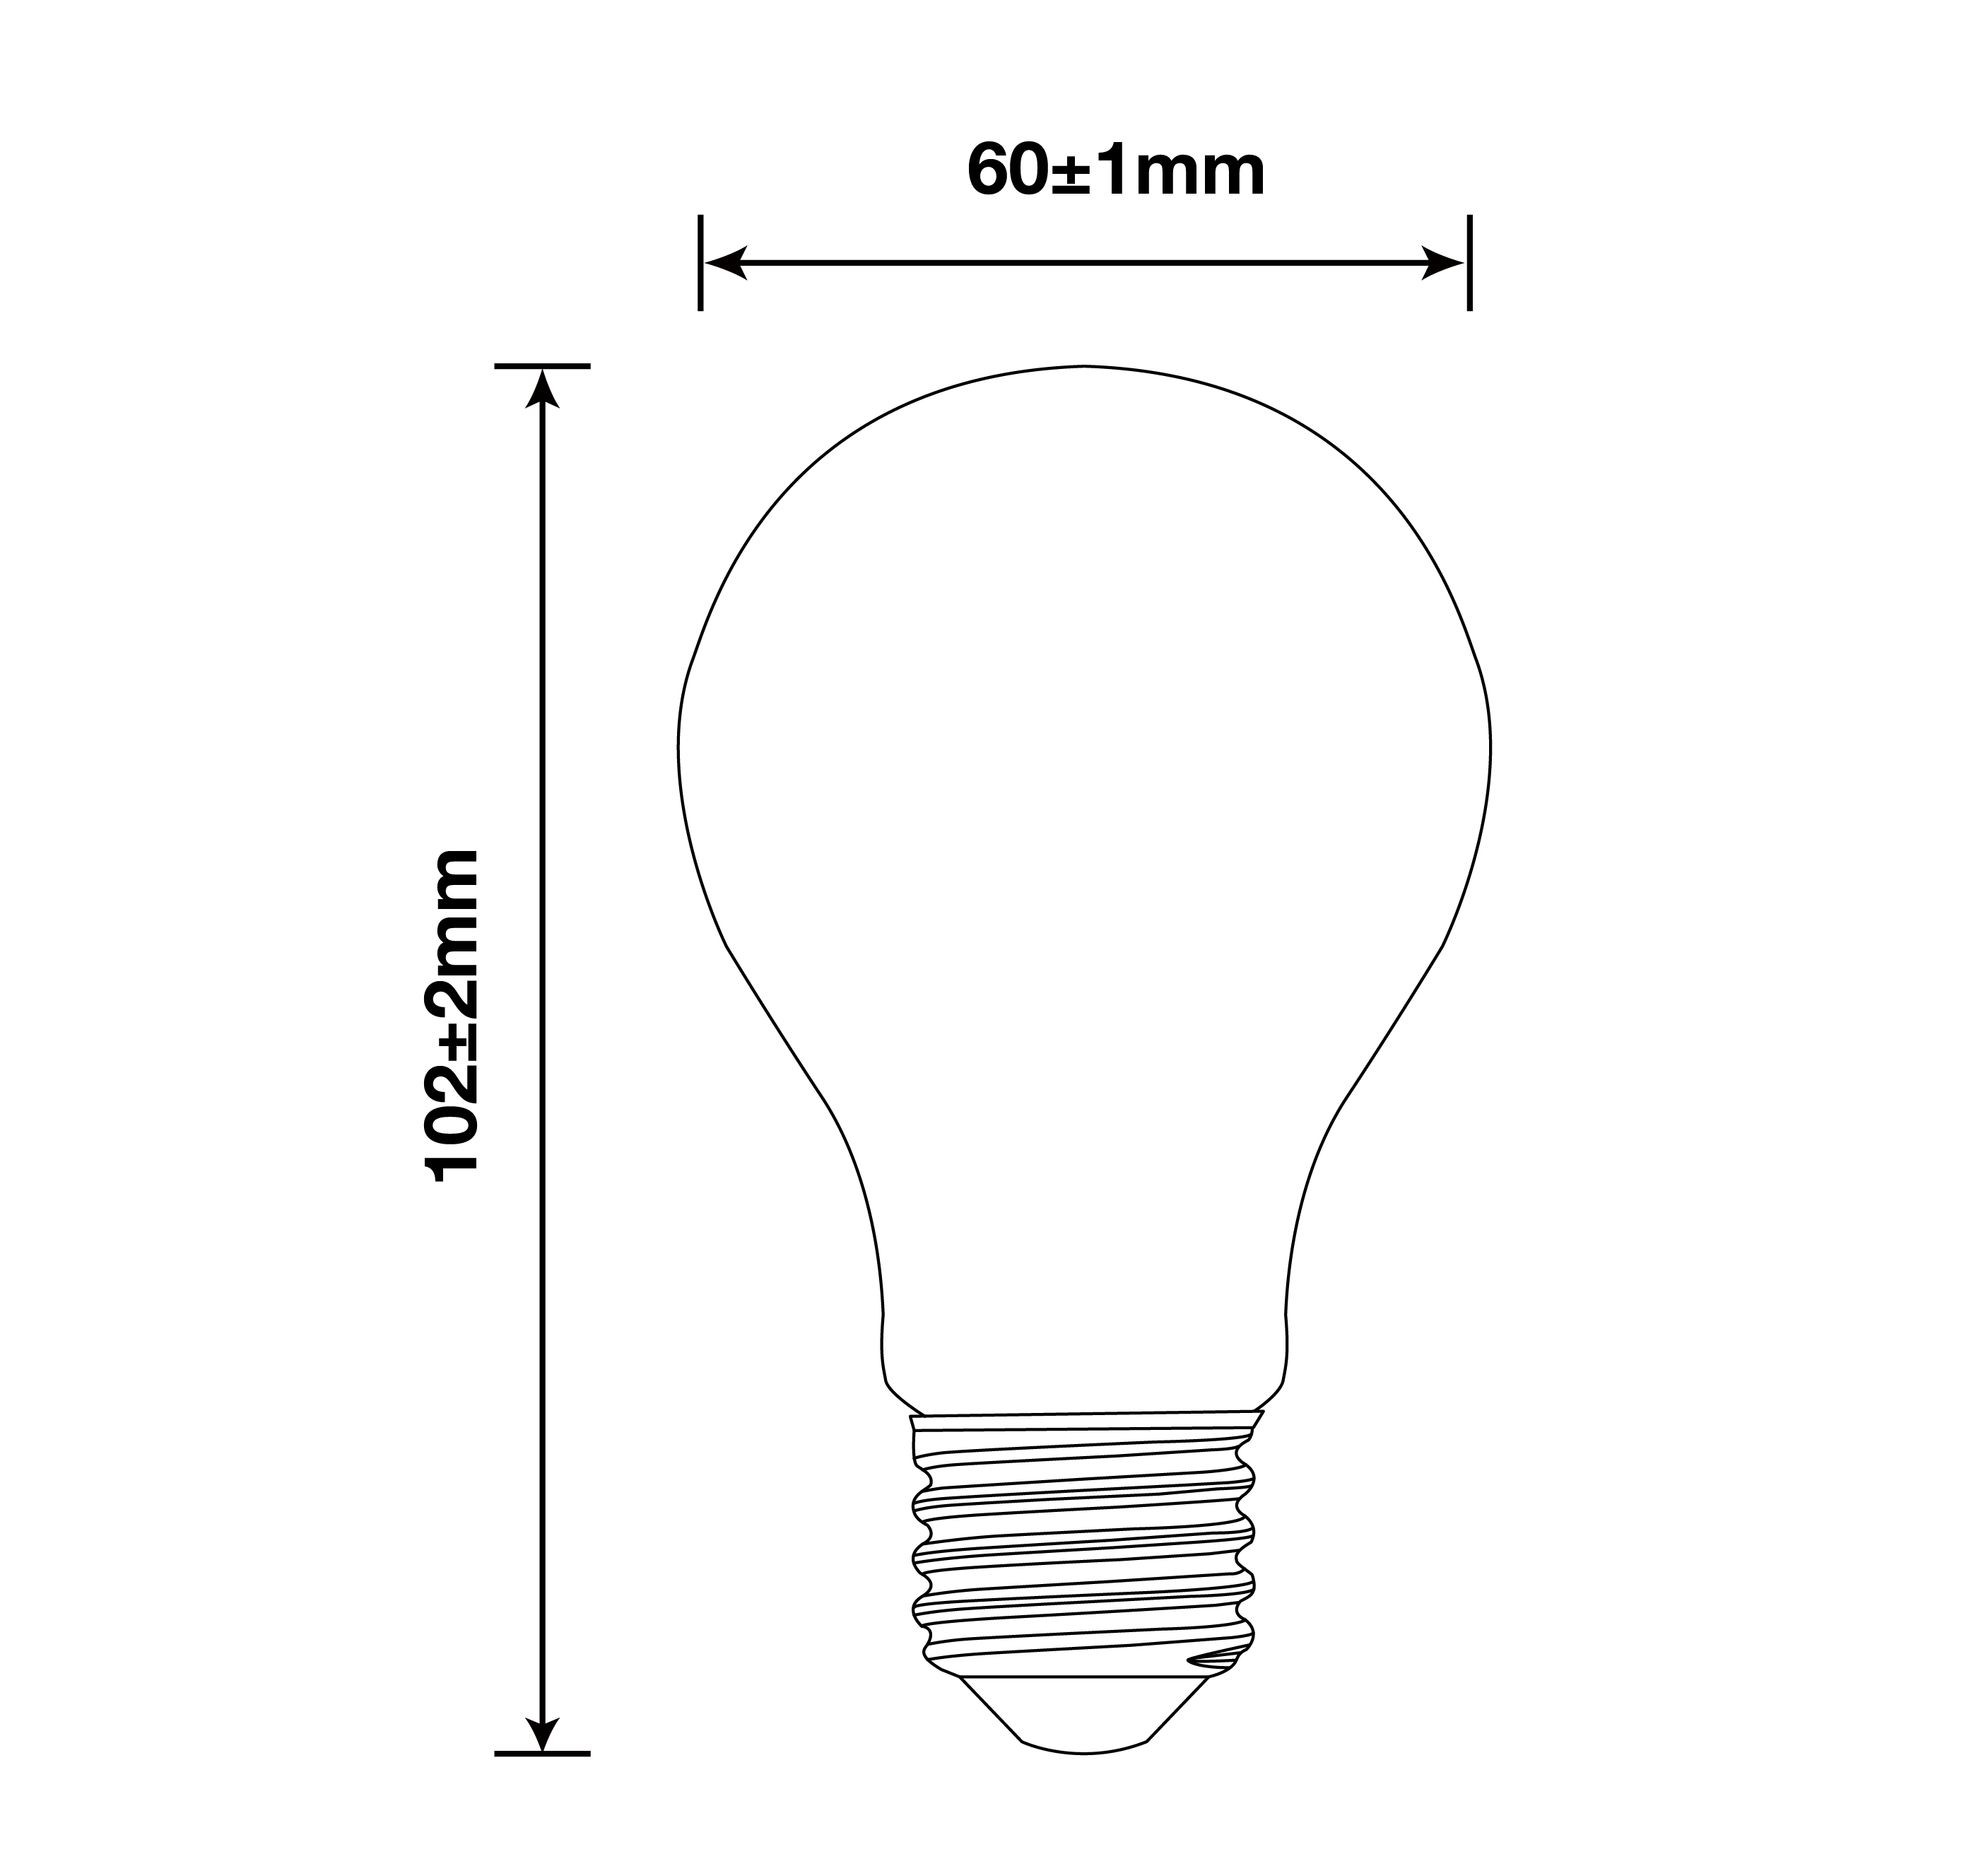 7W A19 Filament Bulbs/60Watts Edison A19 Bulbs